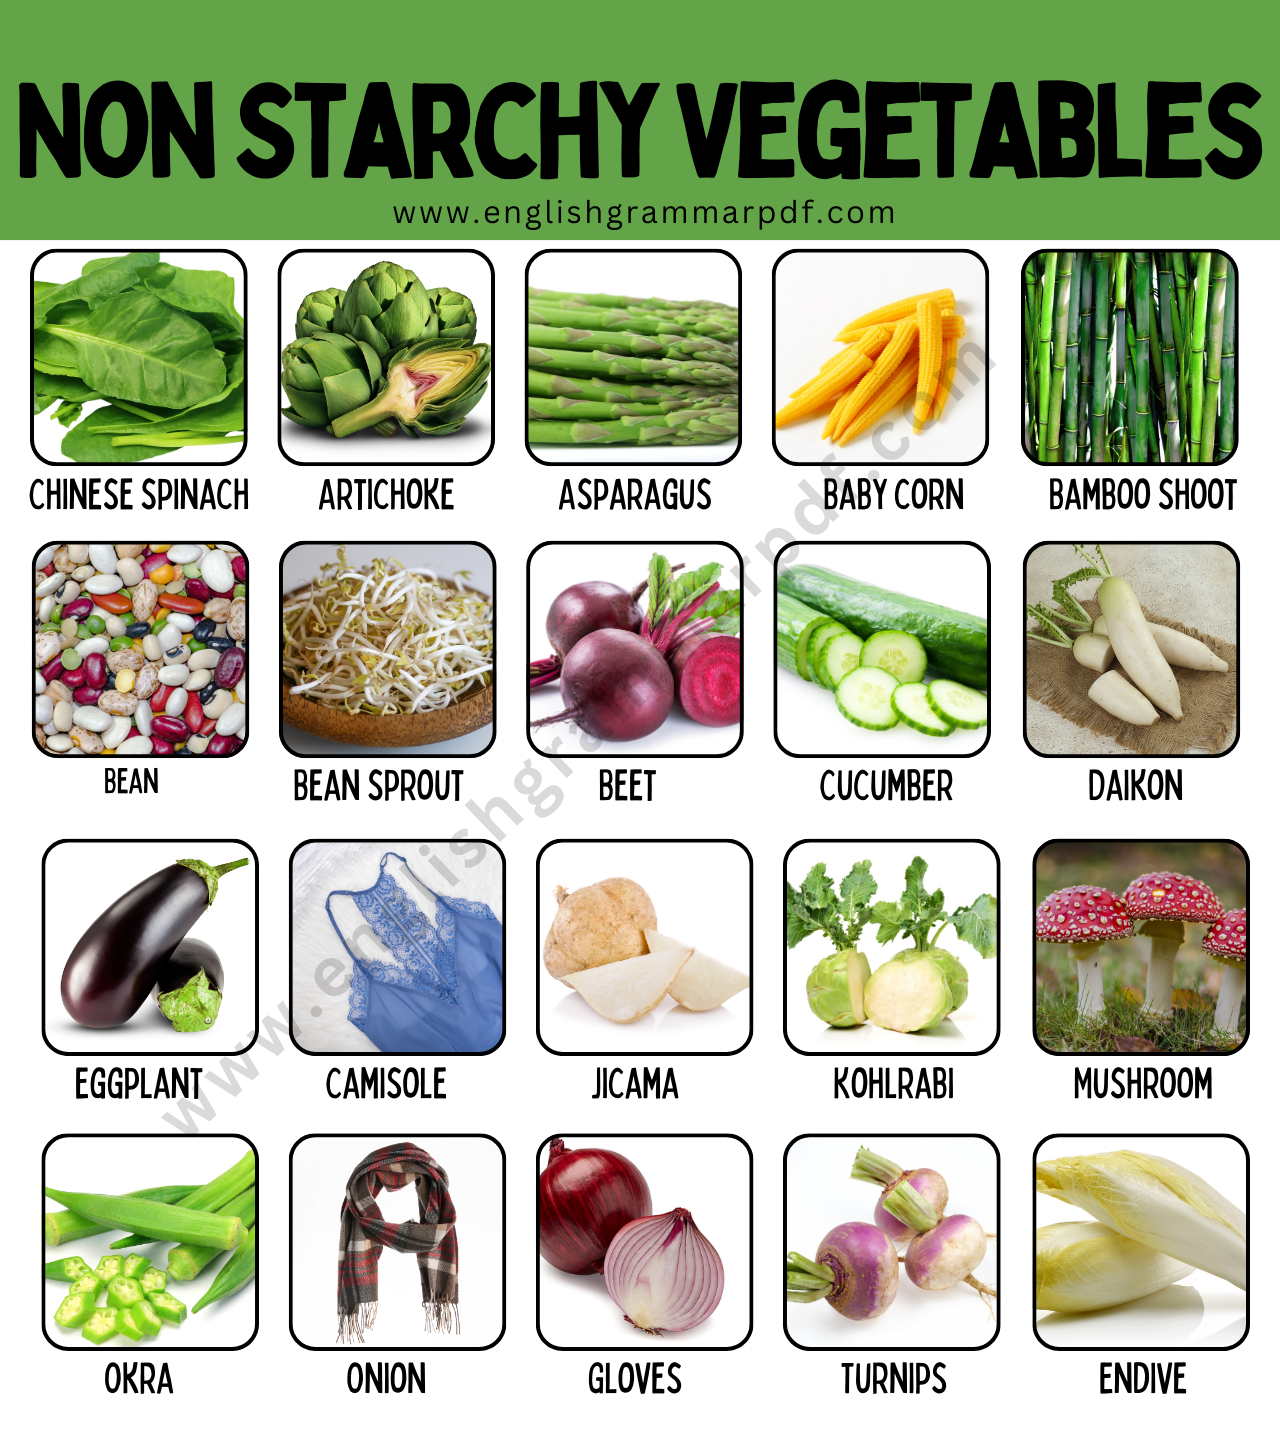 Non Starchy Vegetables list